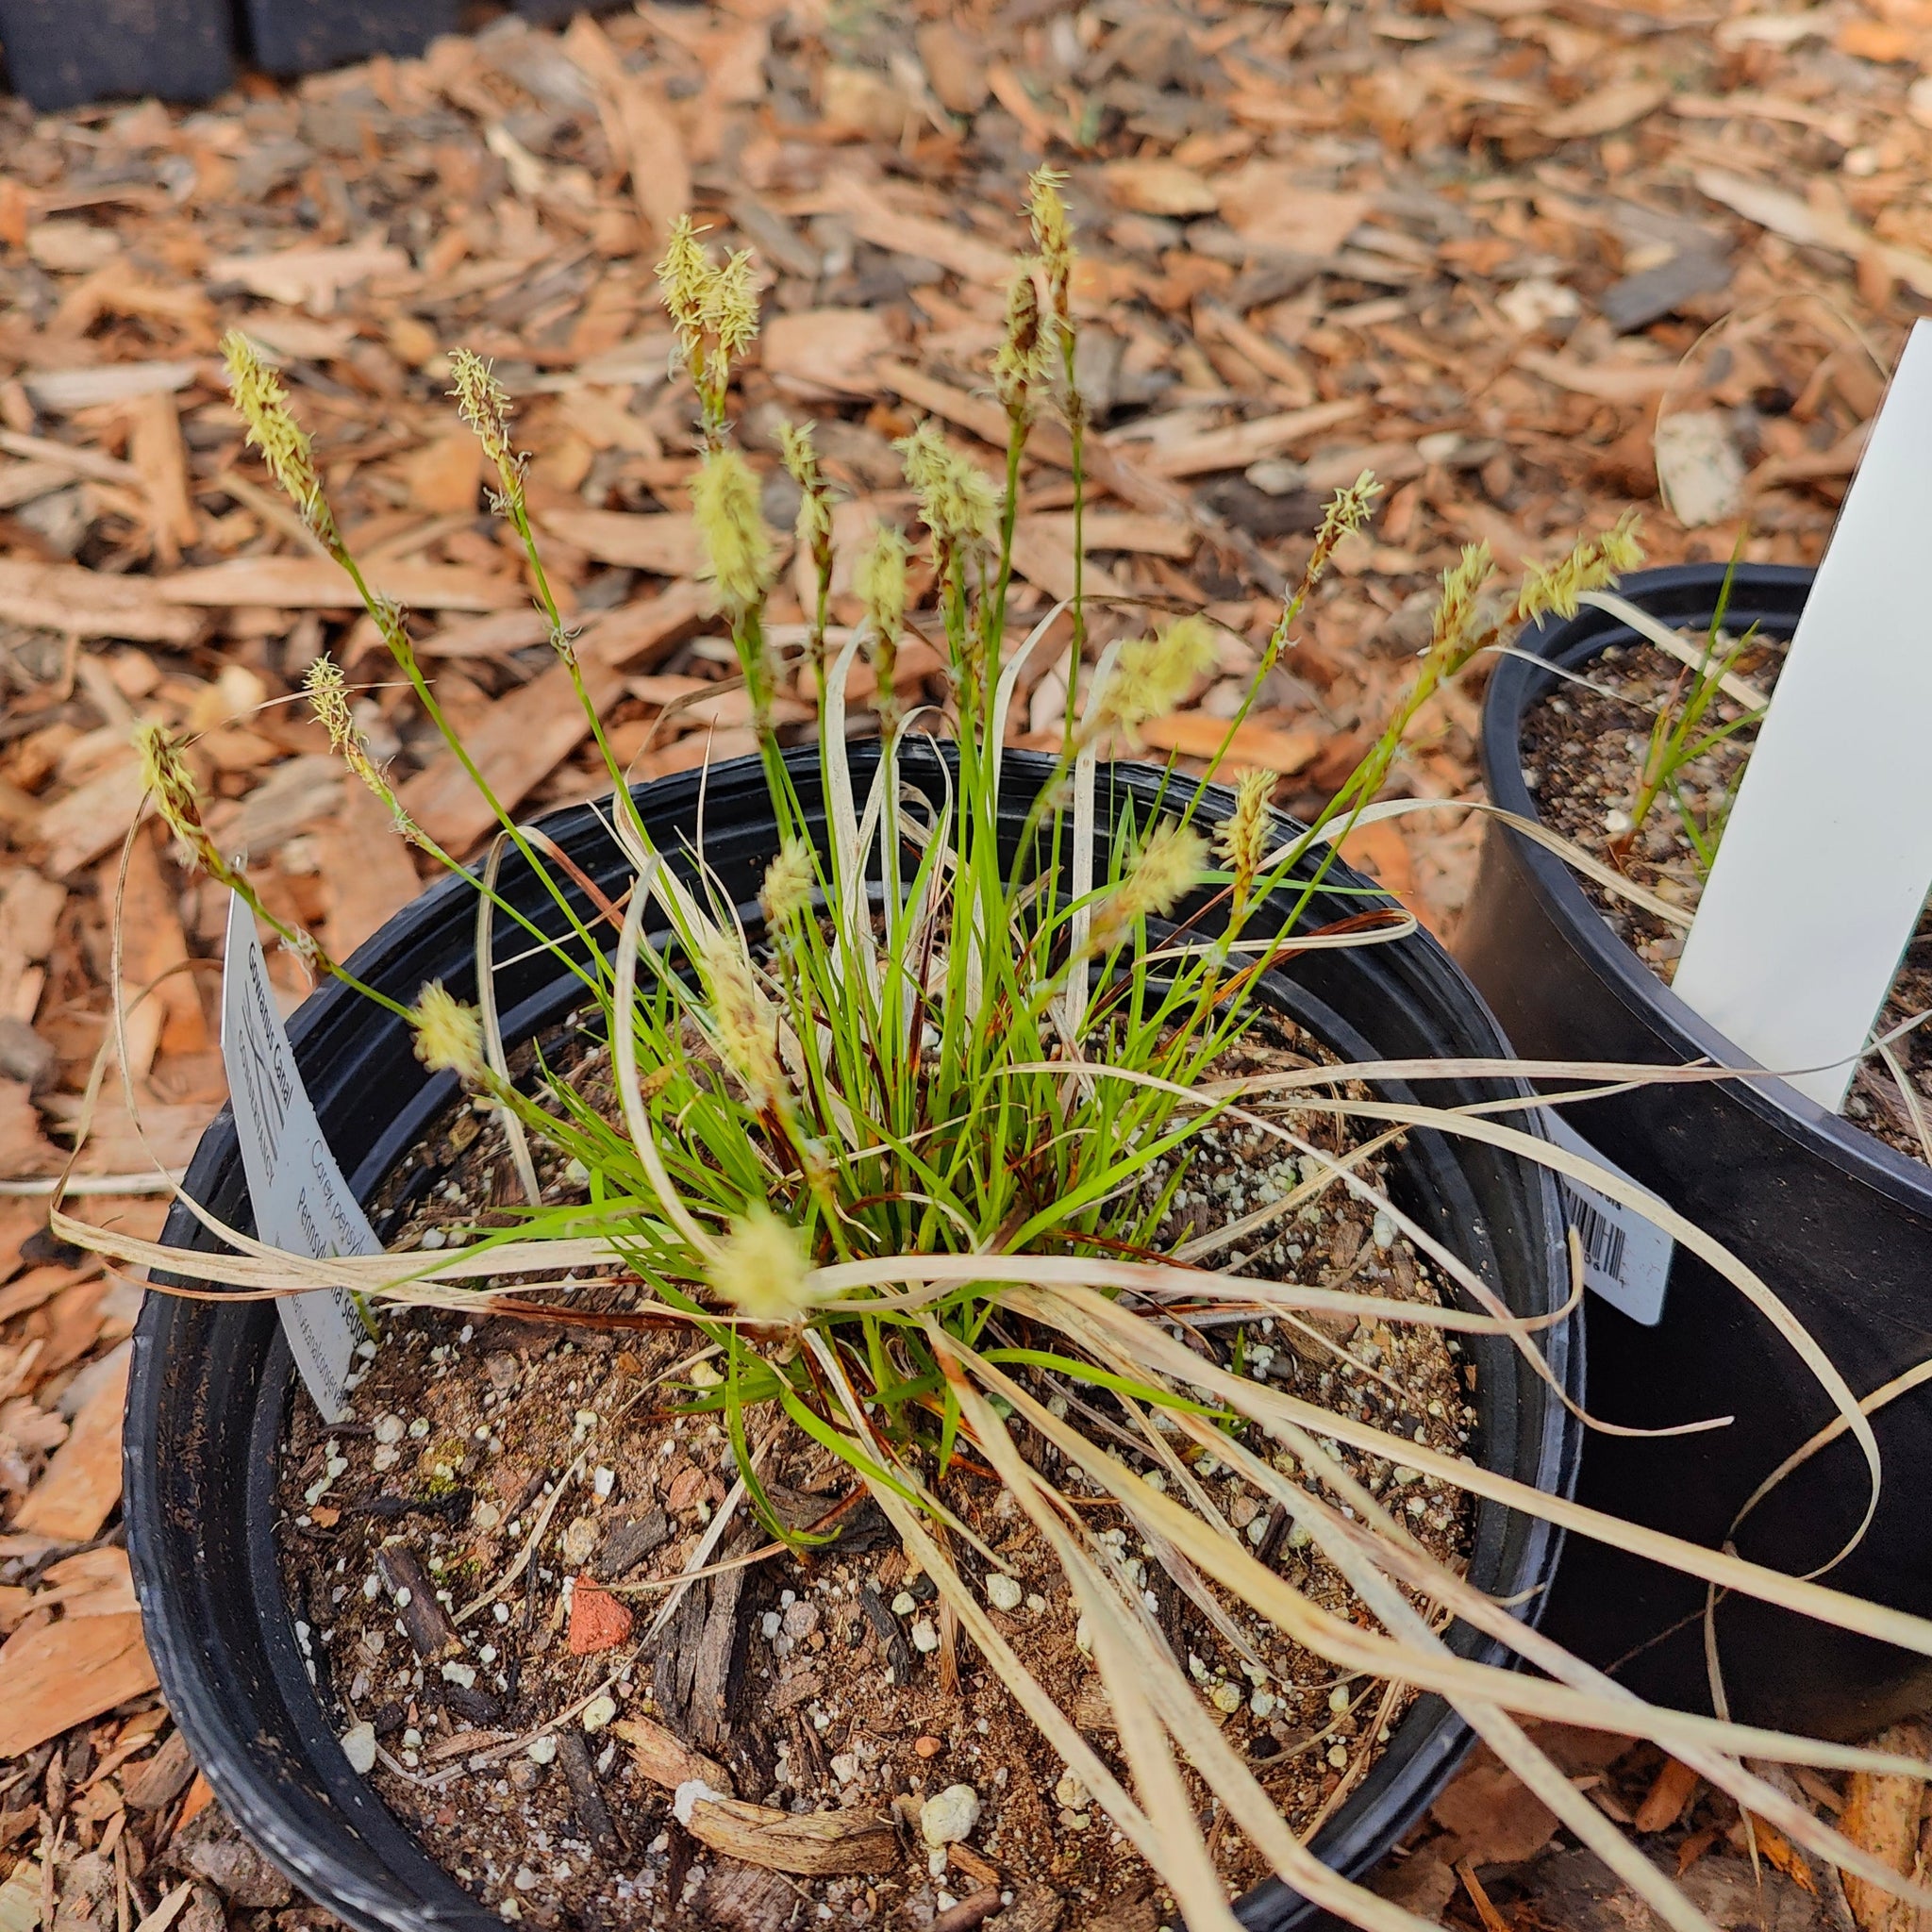 Carex pensylvanica - Pennsylvania Sedge